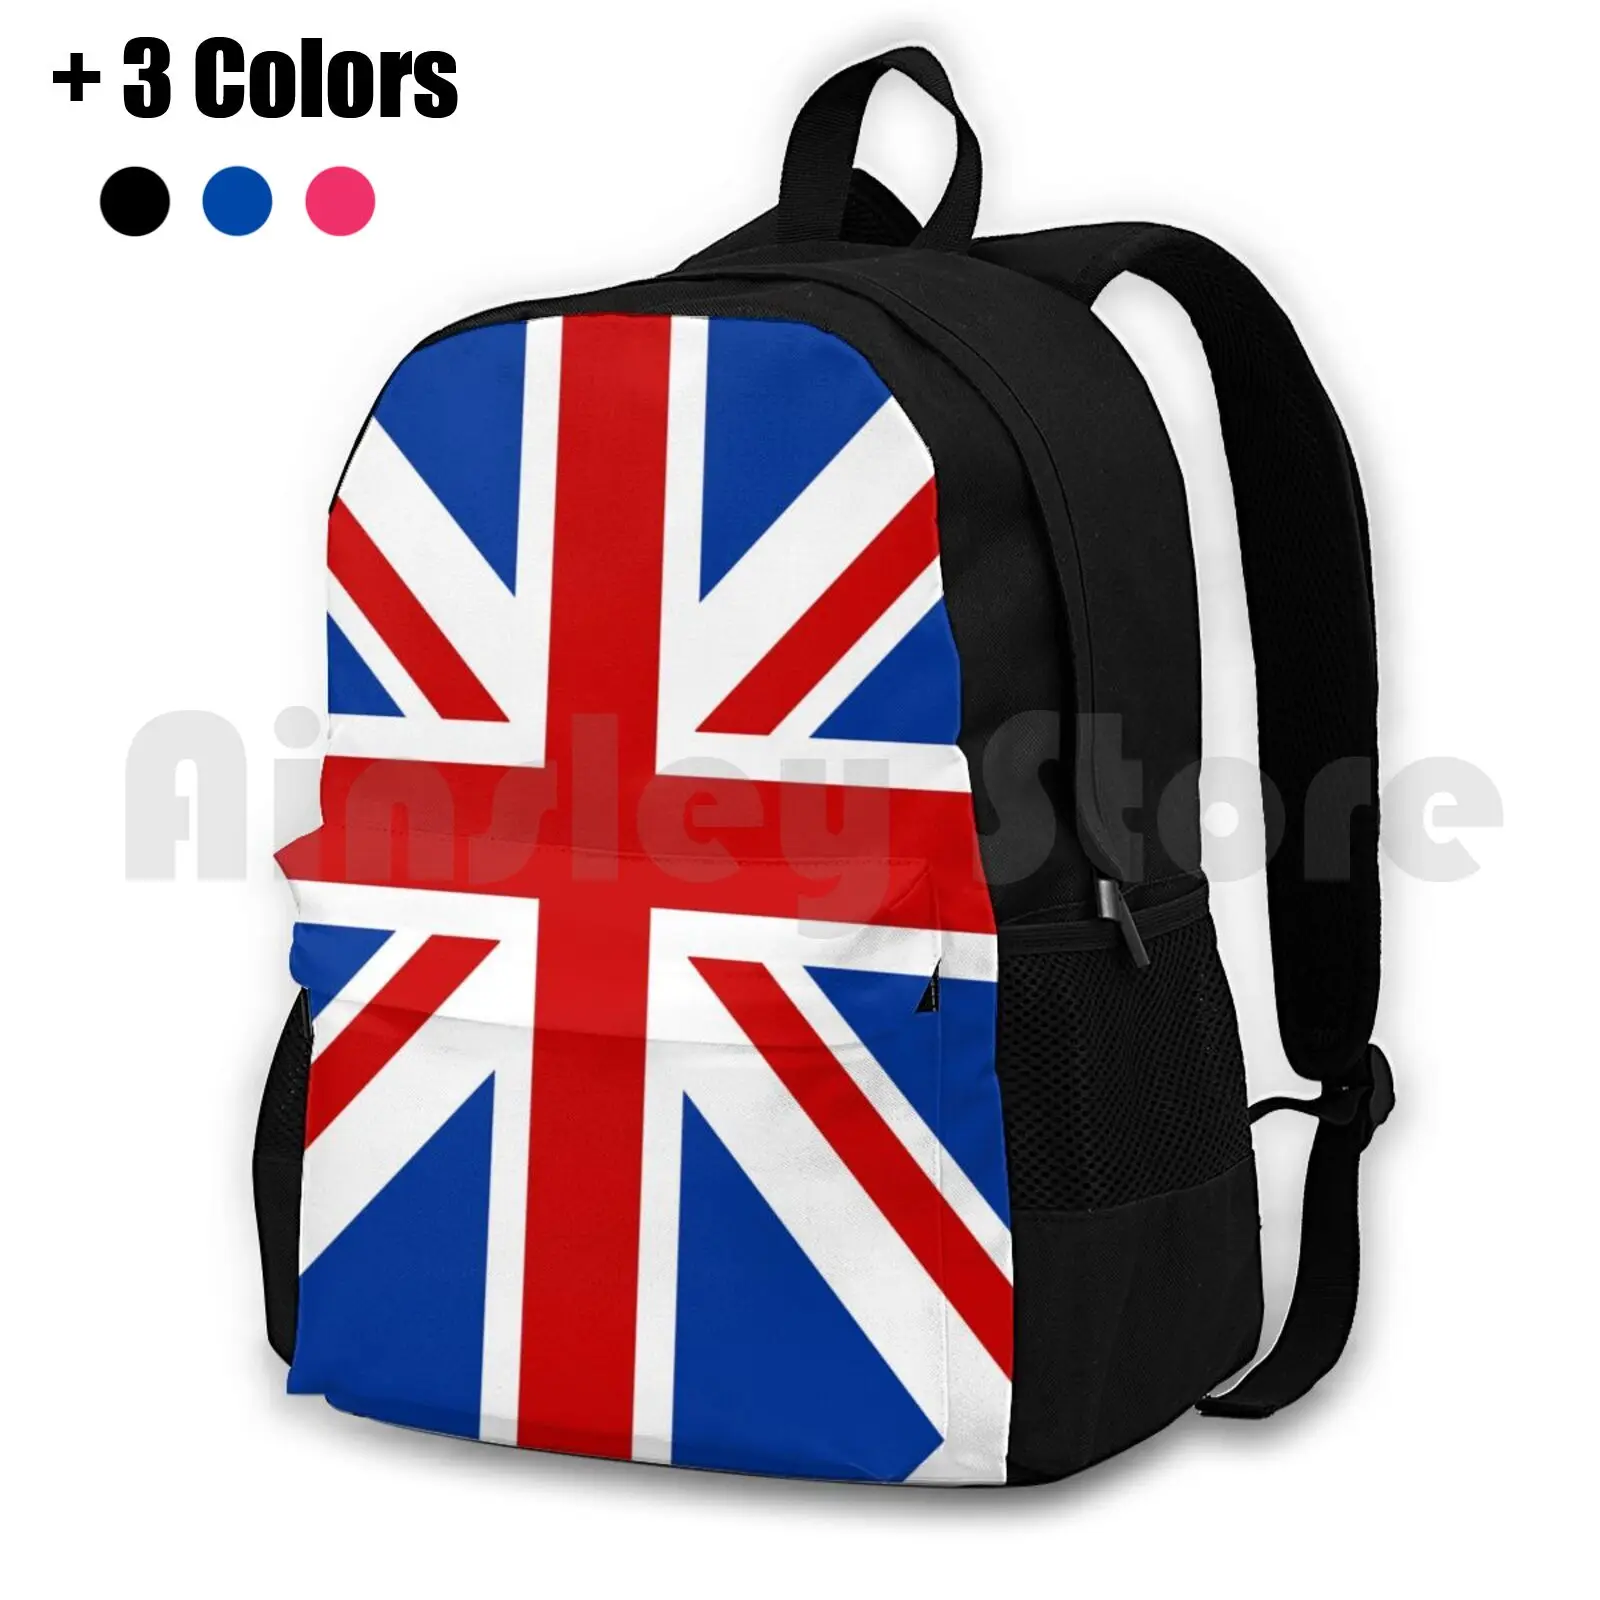 Union Jack ( Red , White & Blue ) Outdoor Hiking Backpack Riding Climbing Sports Bag United Kingdom Uk Retro Cool Popular